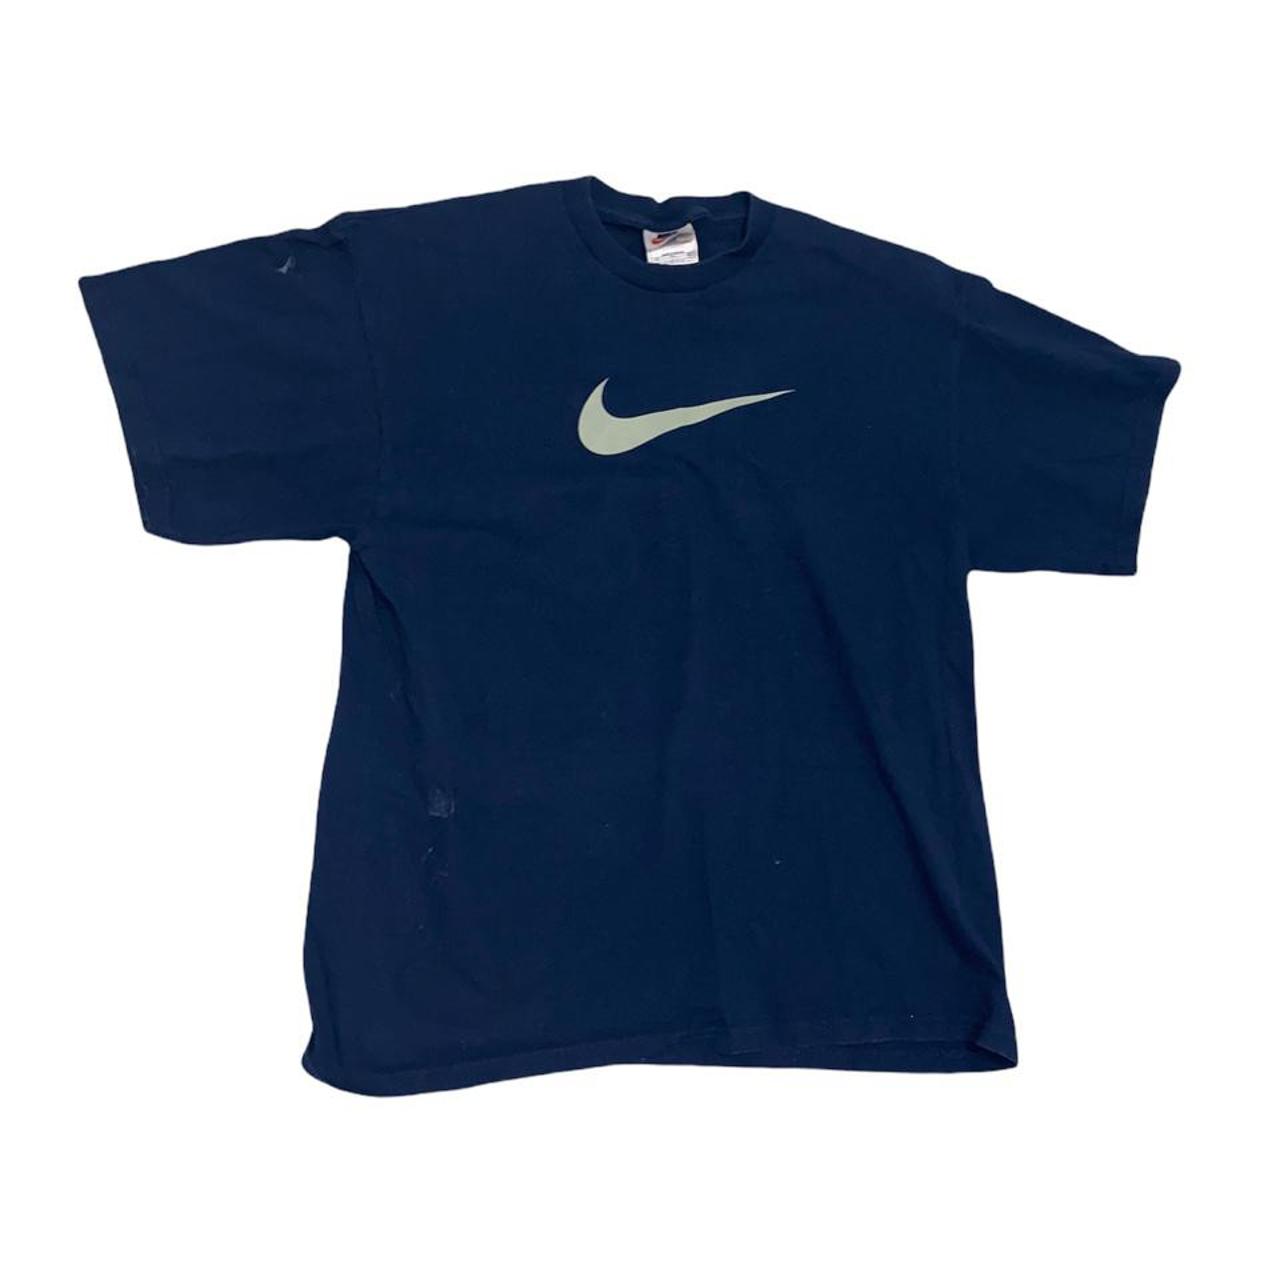 90s Nike Shirt #nike #vintagenike #90snike... - Depop